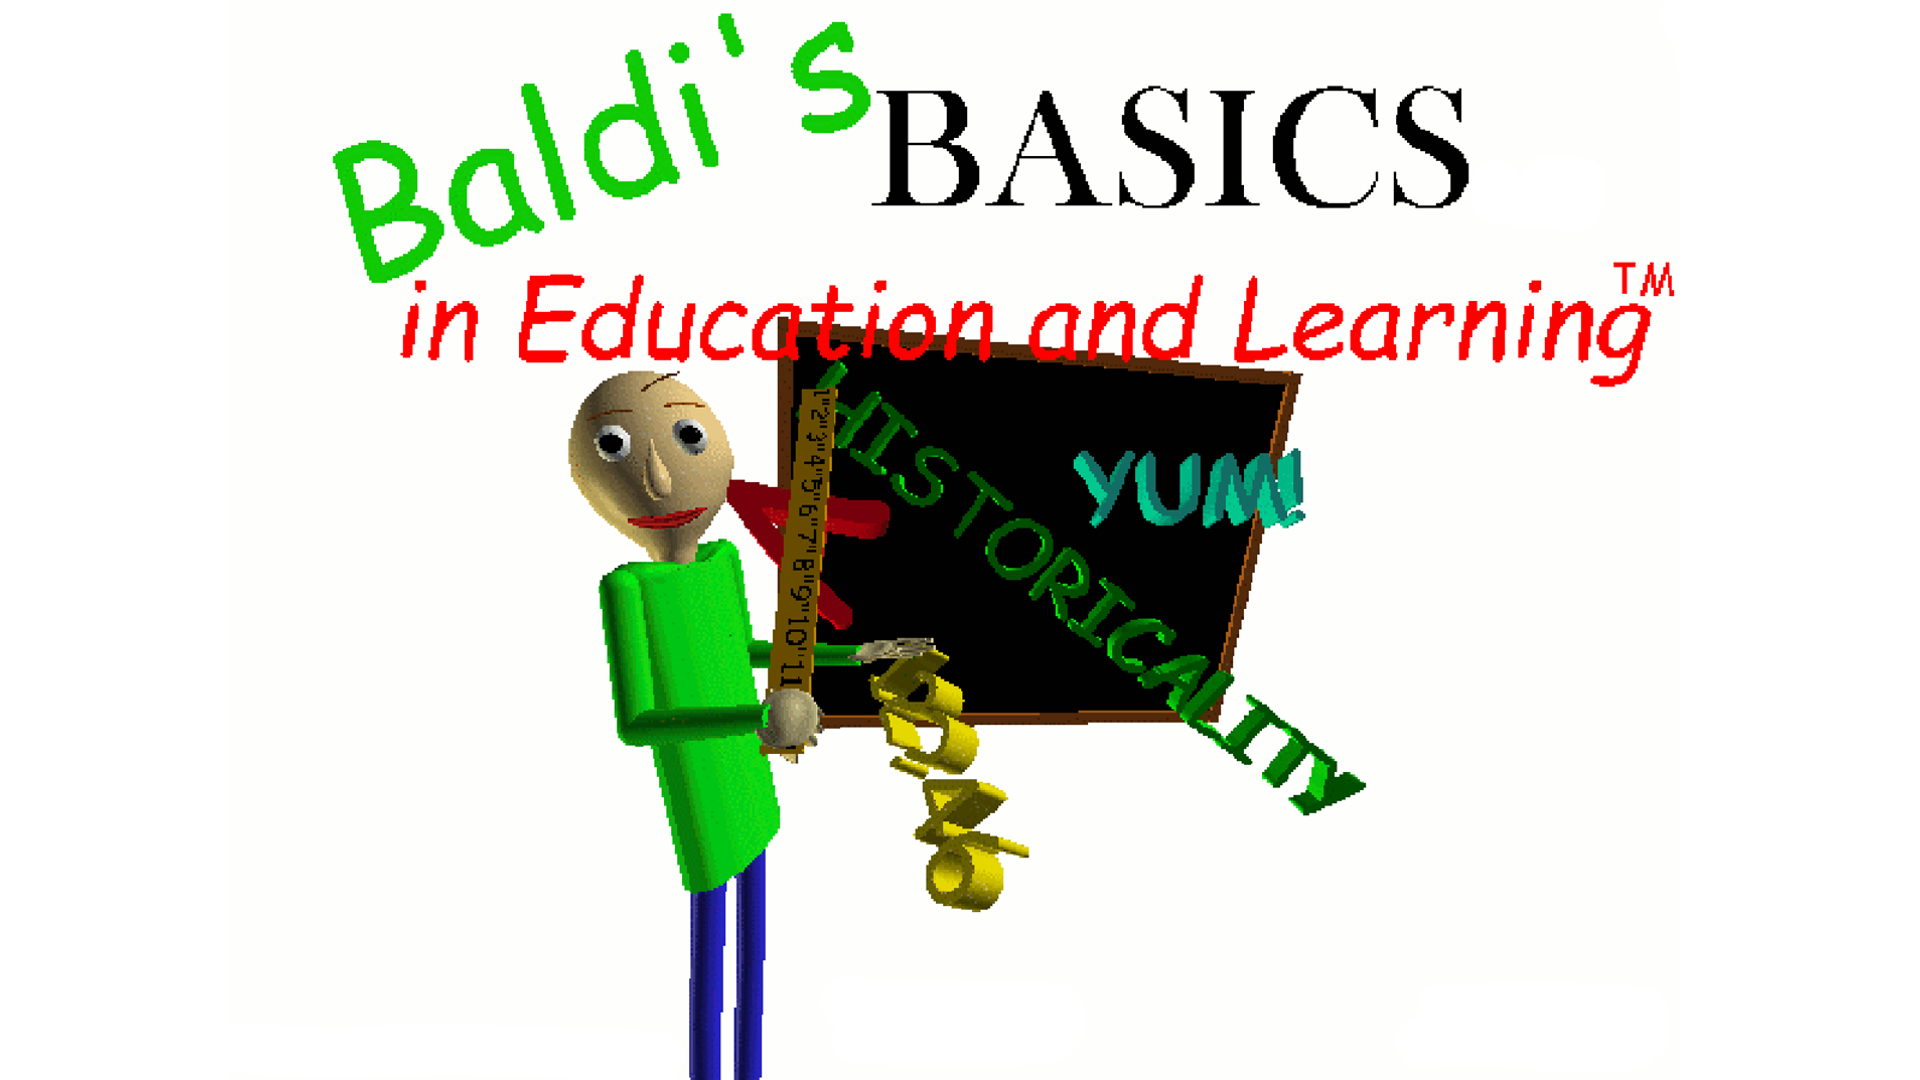 Baldi's Basics in Education and Learning Logo